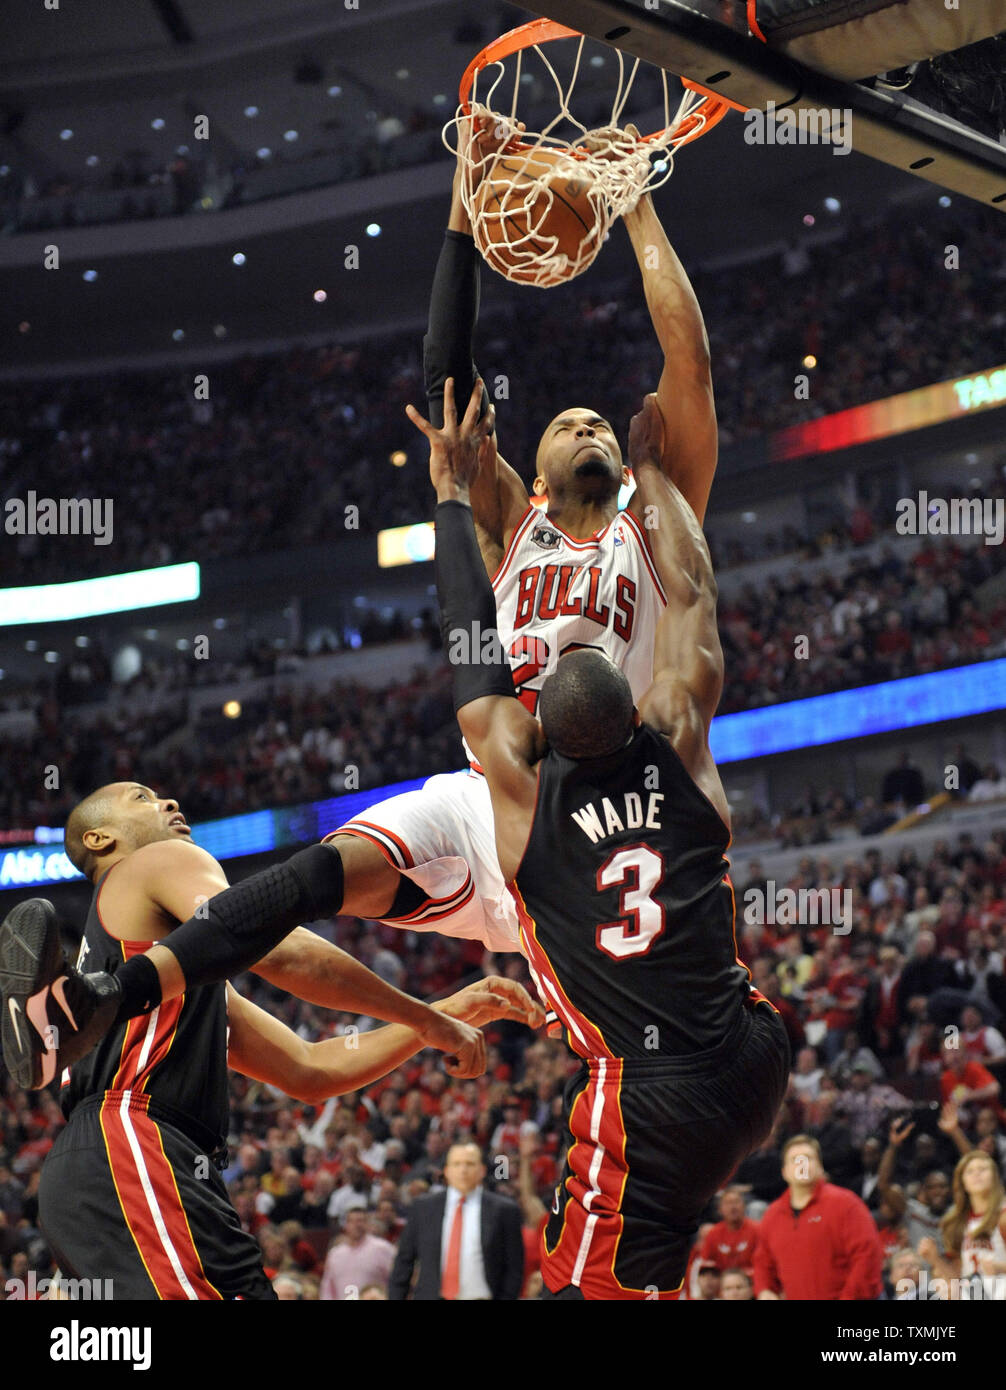 2010 NBA Playoffs: Dwyane Wade Dunks On  - You Got Dunked On